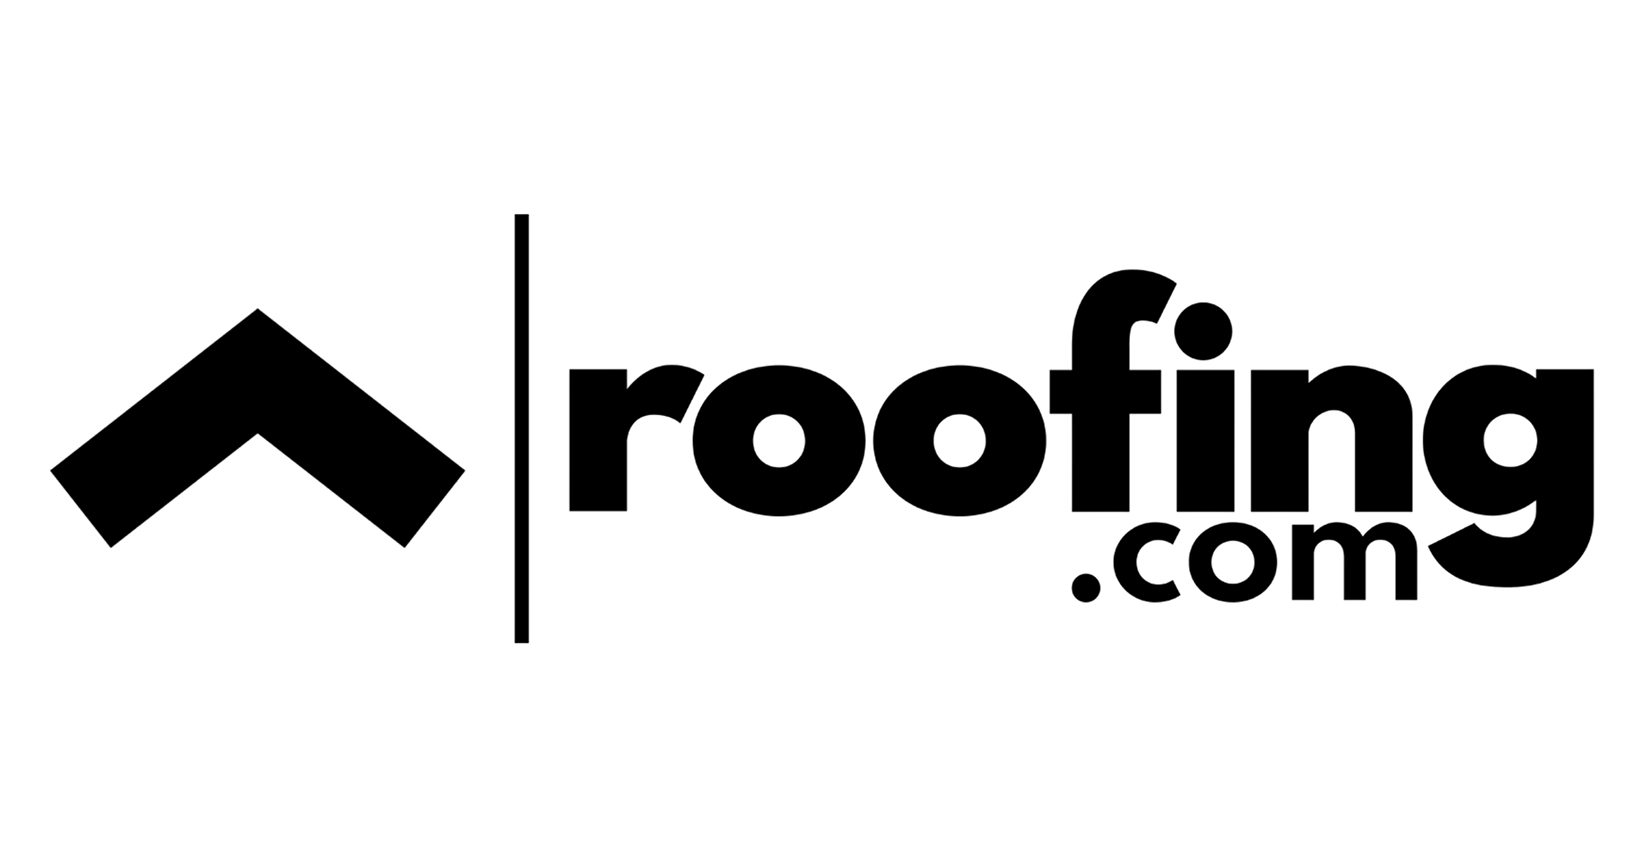 (c) Roofing.com